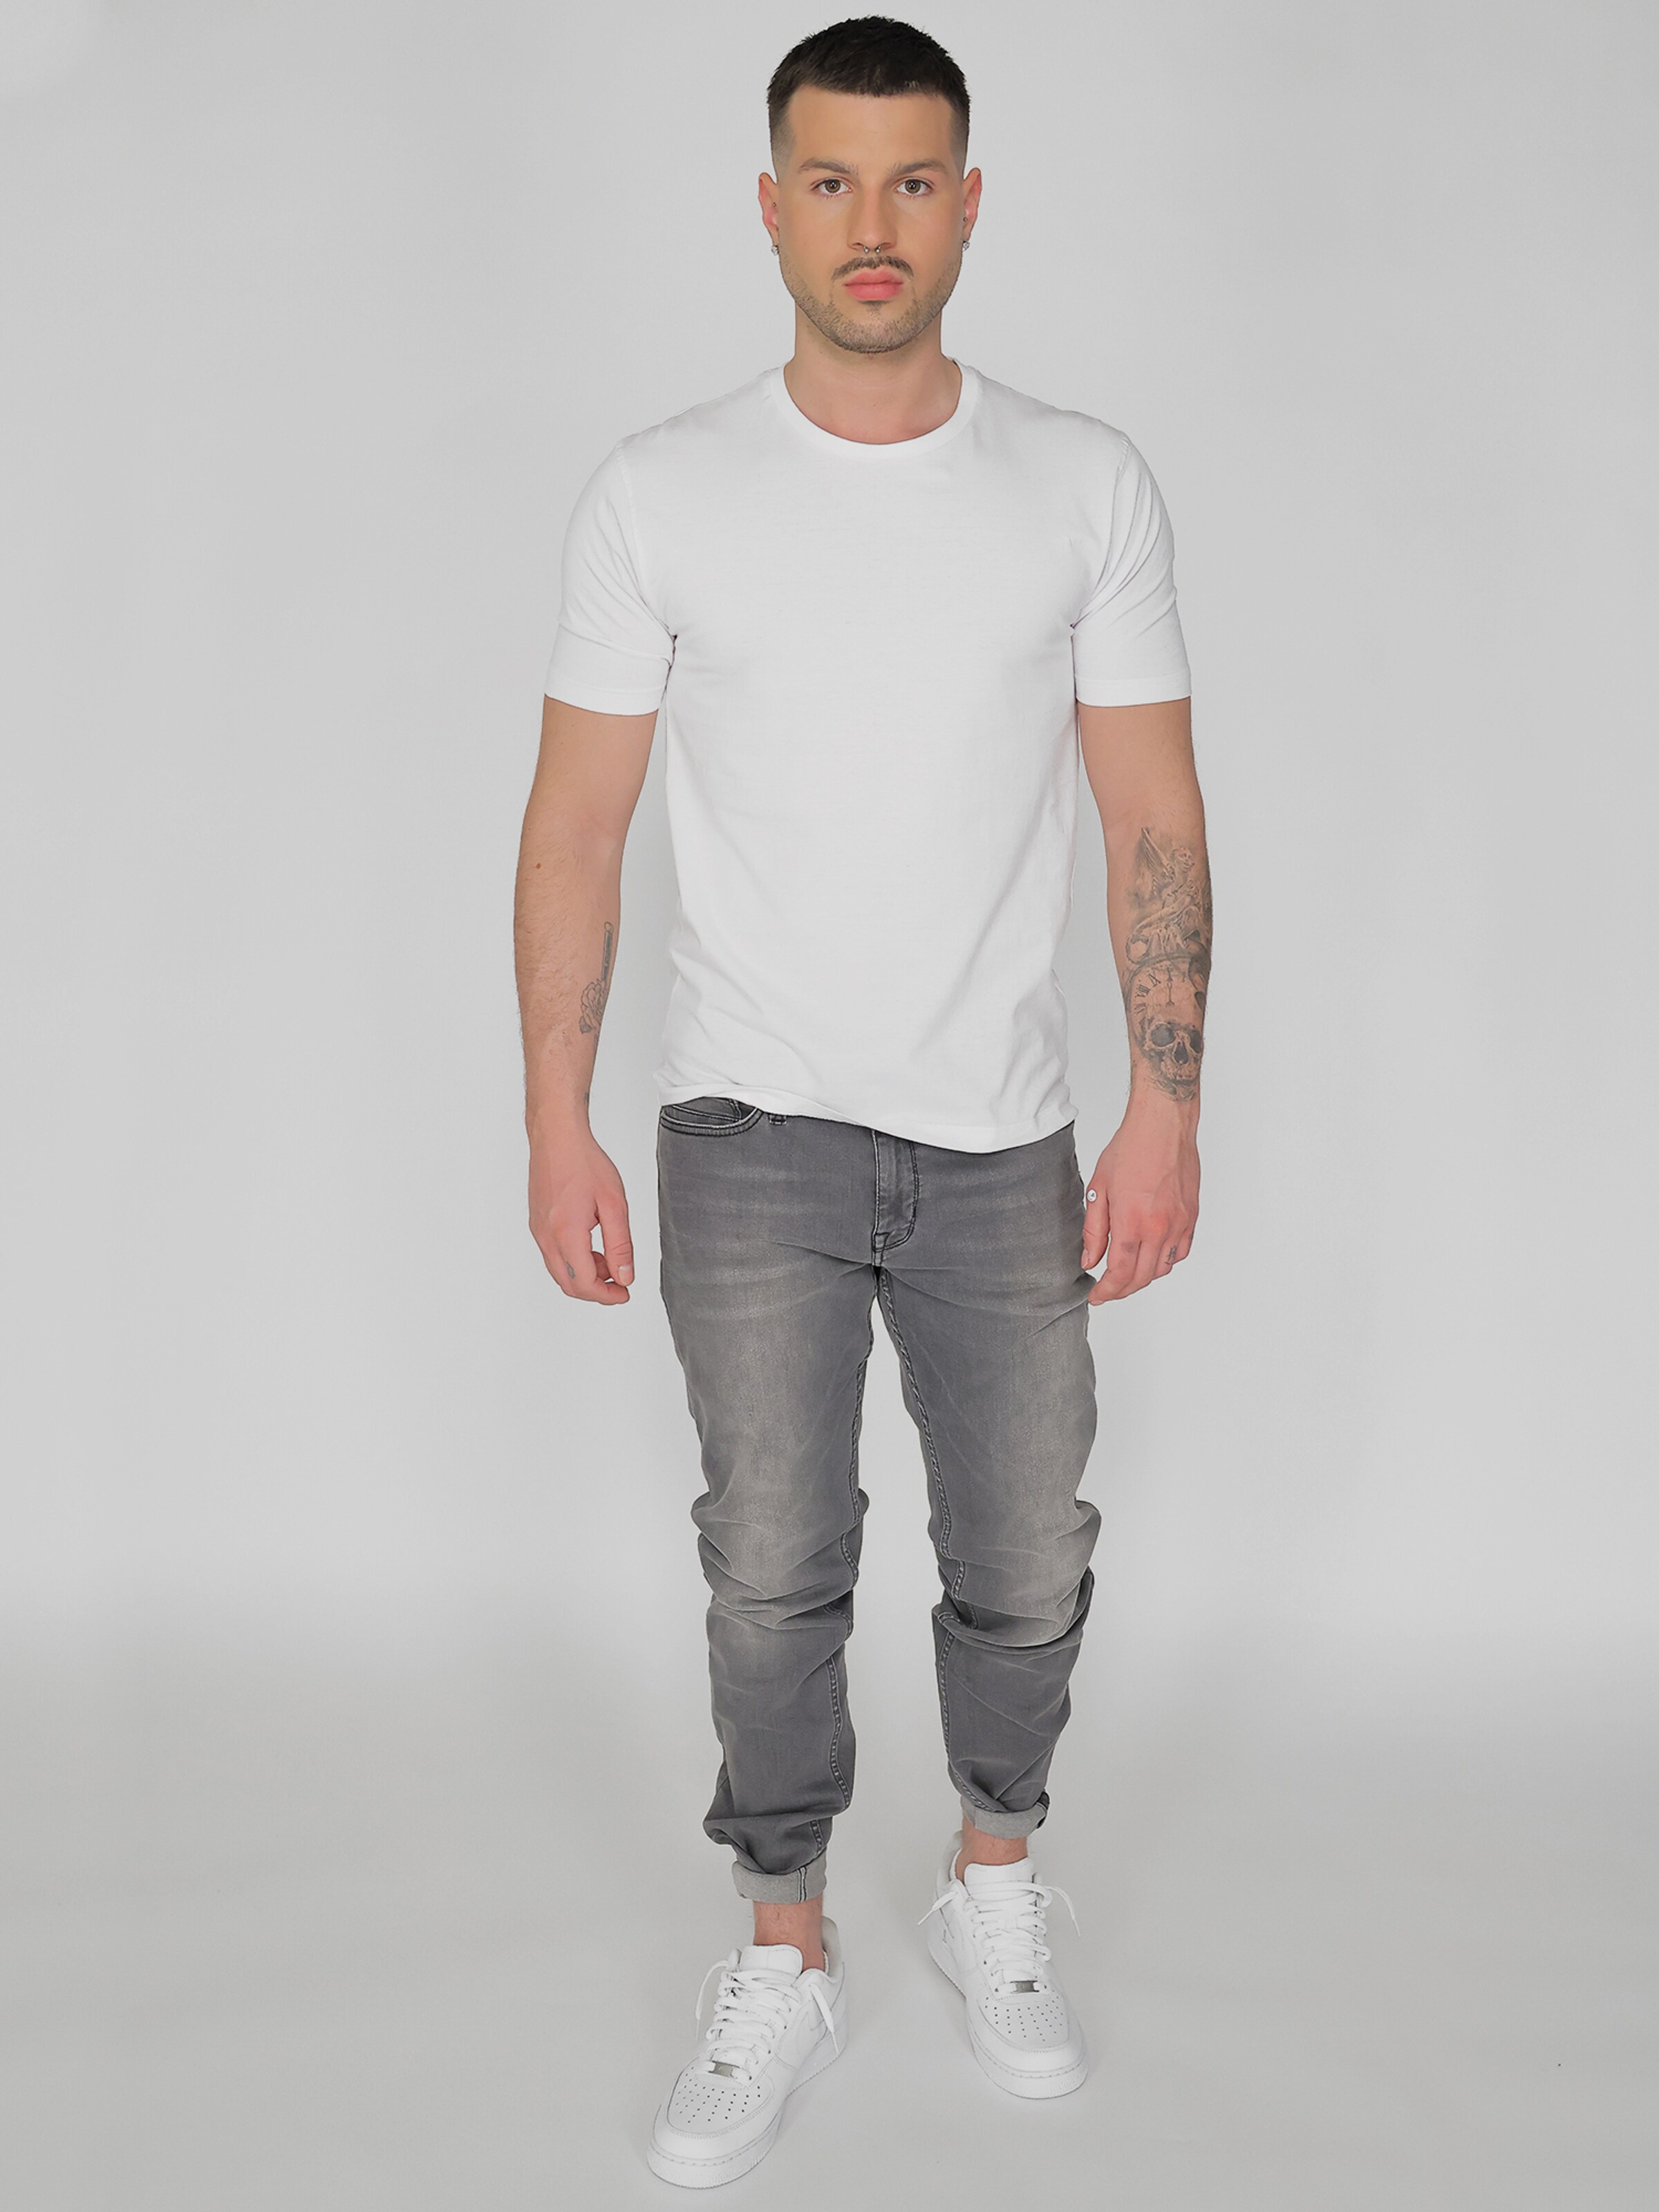 Männer Shirts Maze Shirt in Weiß - AB18607